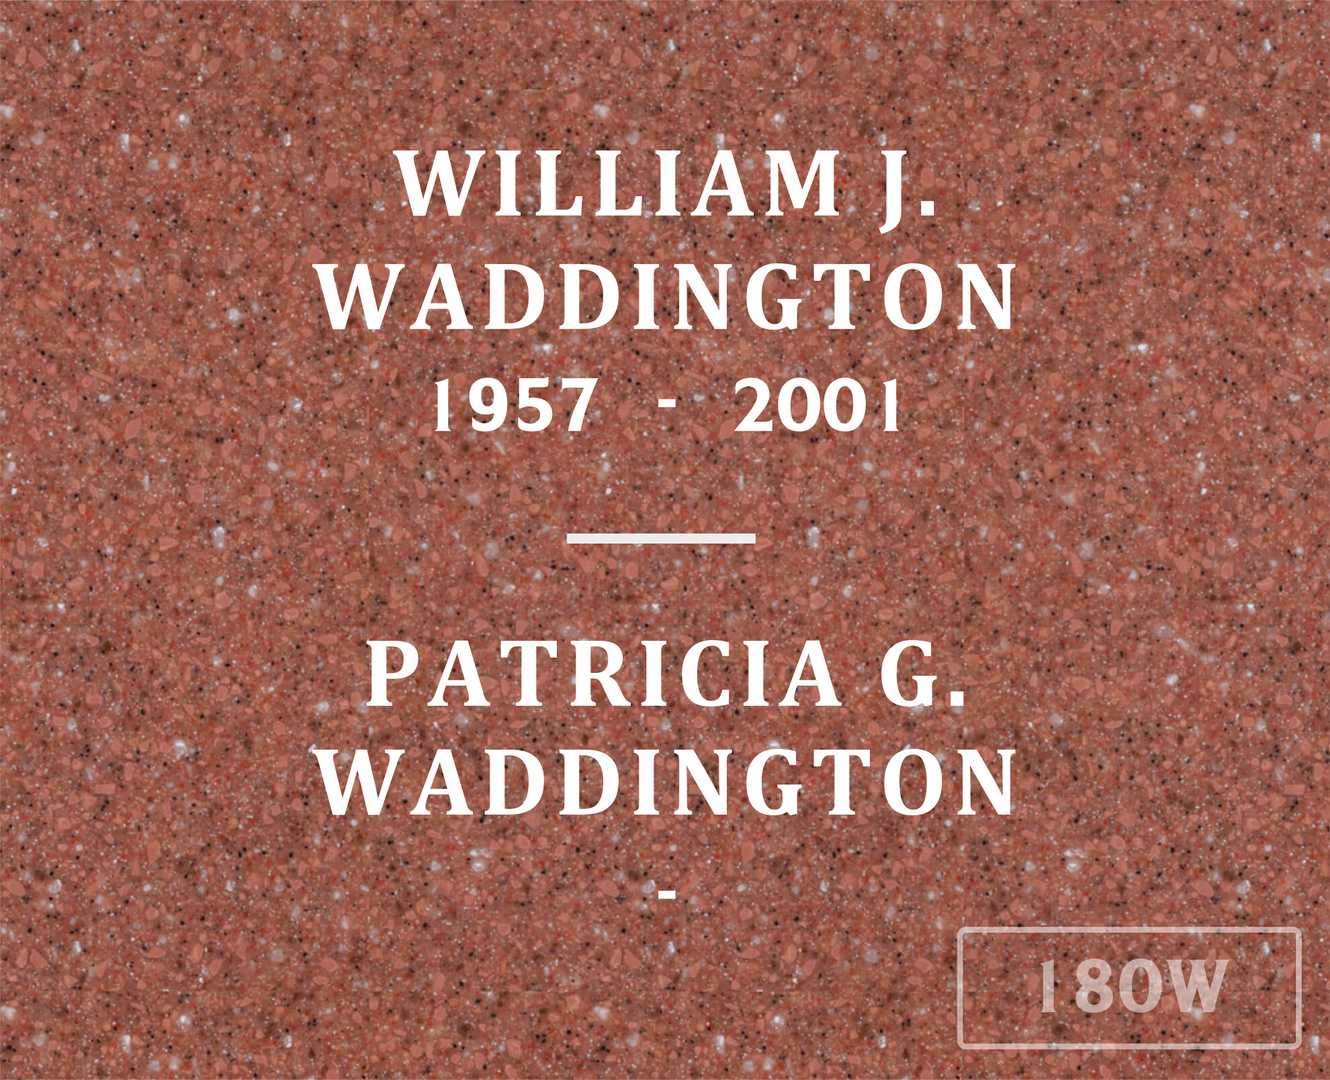 William J. Waddington's grave